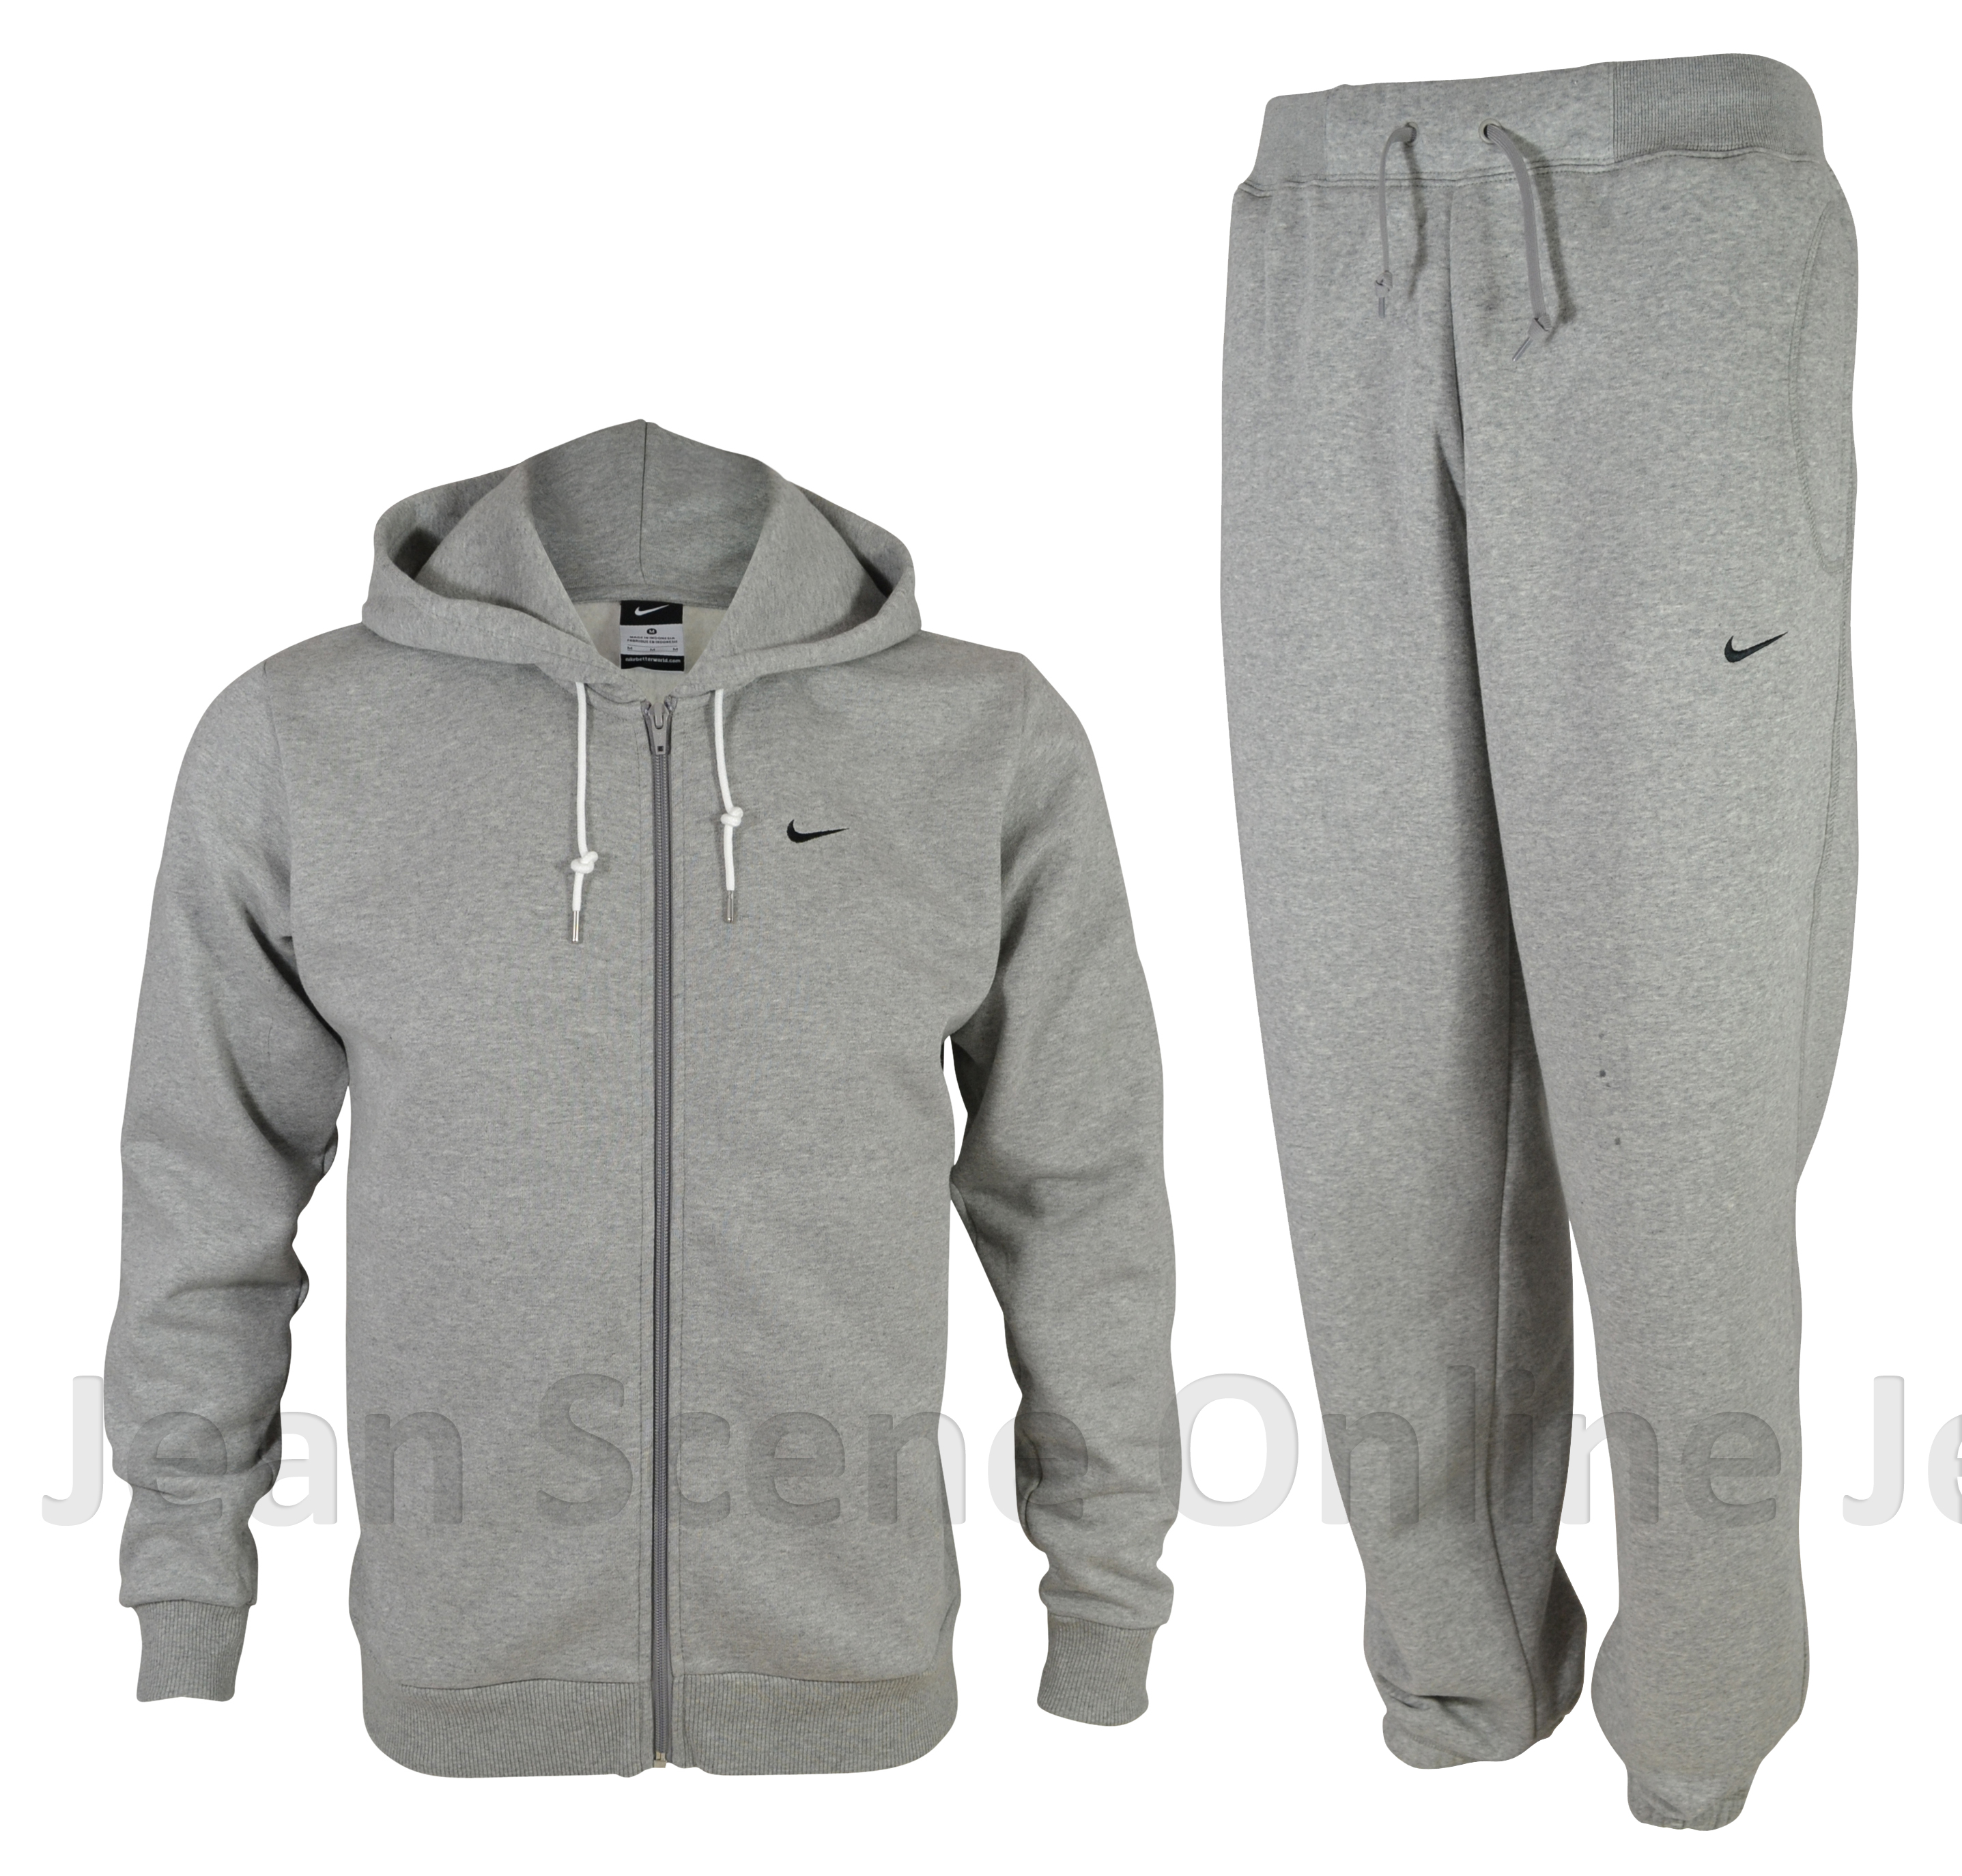 New Nike Mens Homme Tracksuit Bottoms Pants & Hooded Zip Jacket Top ...